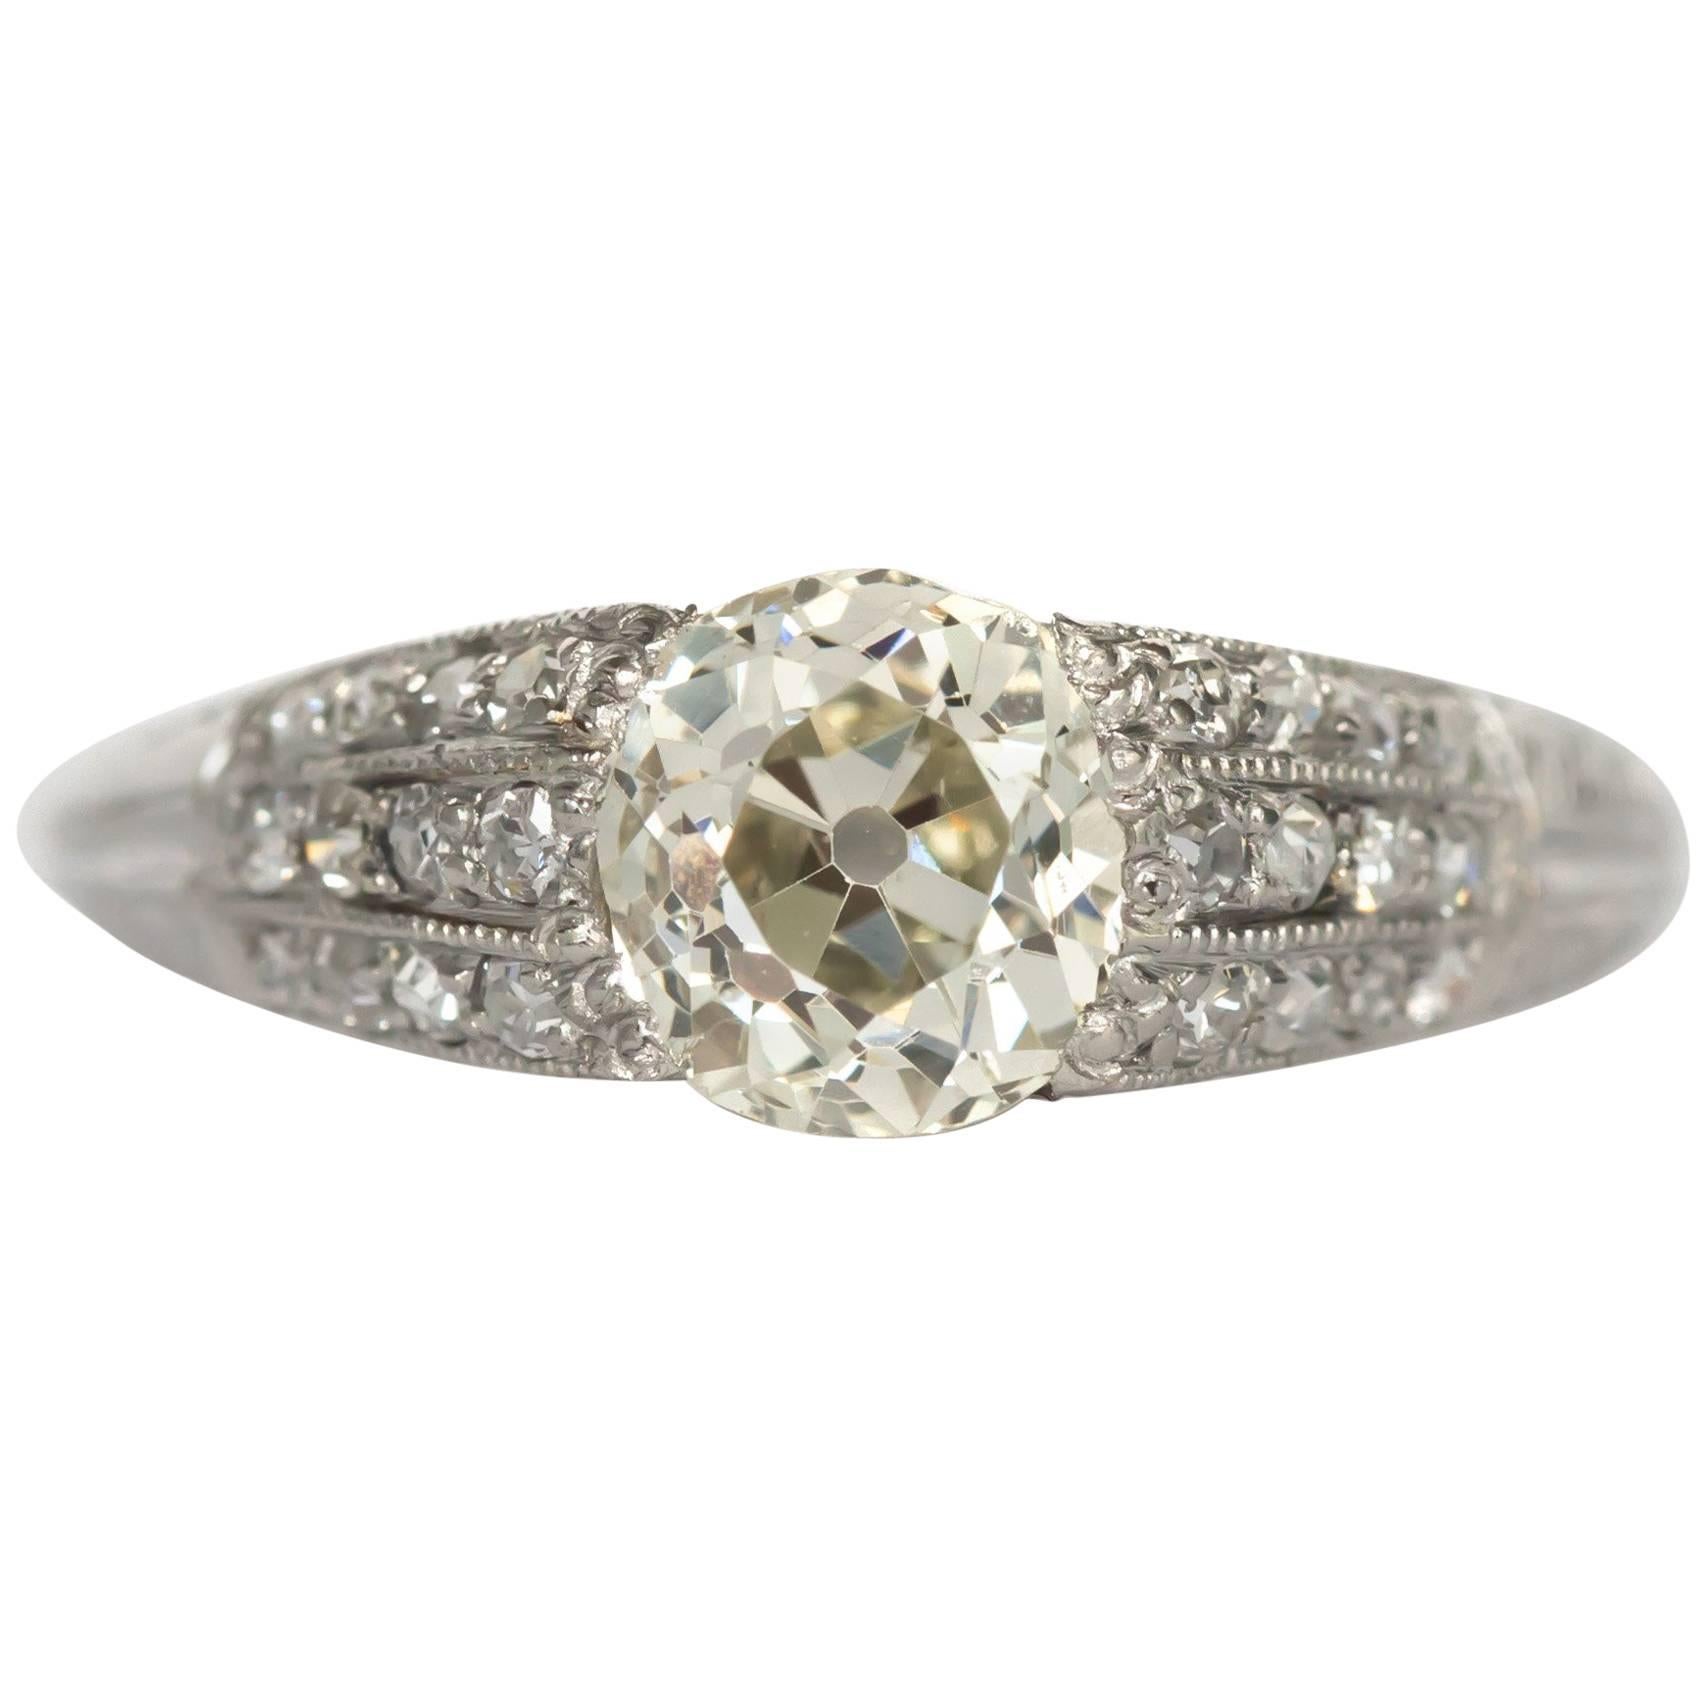 1920s Art Deco Platinum GIA Certified 1.27 Carat Diamond Engagement Ring For Sale